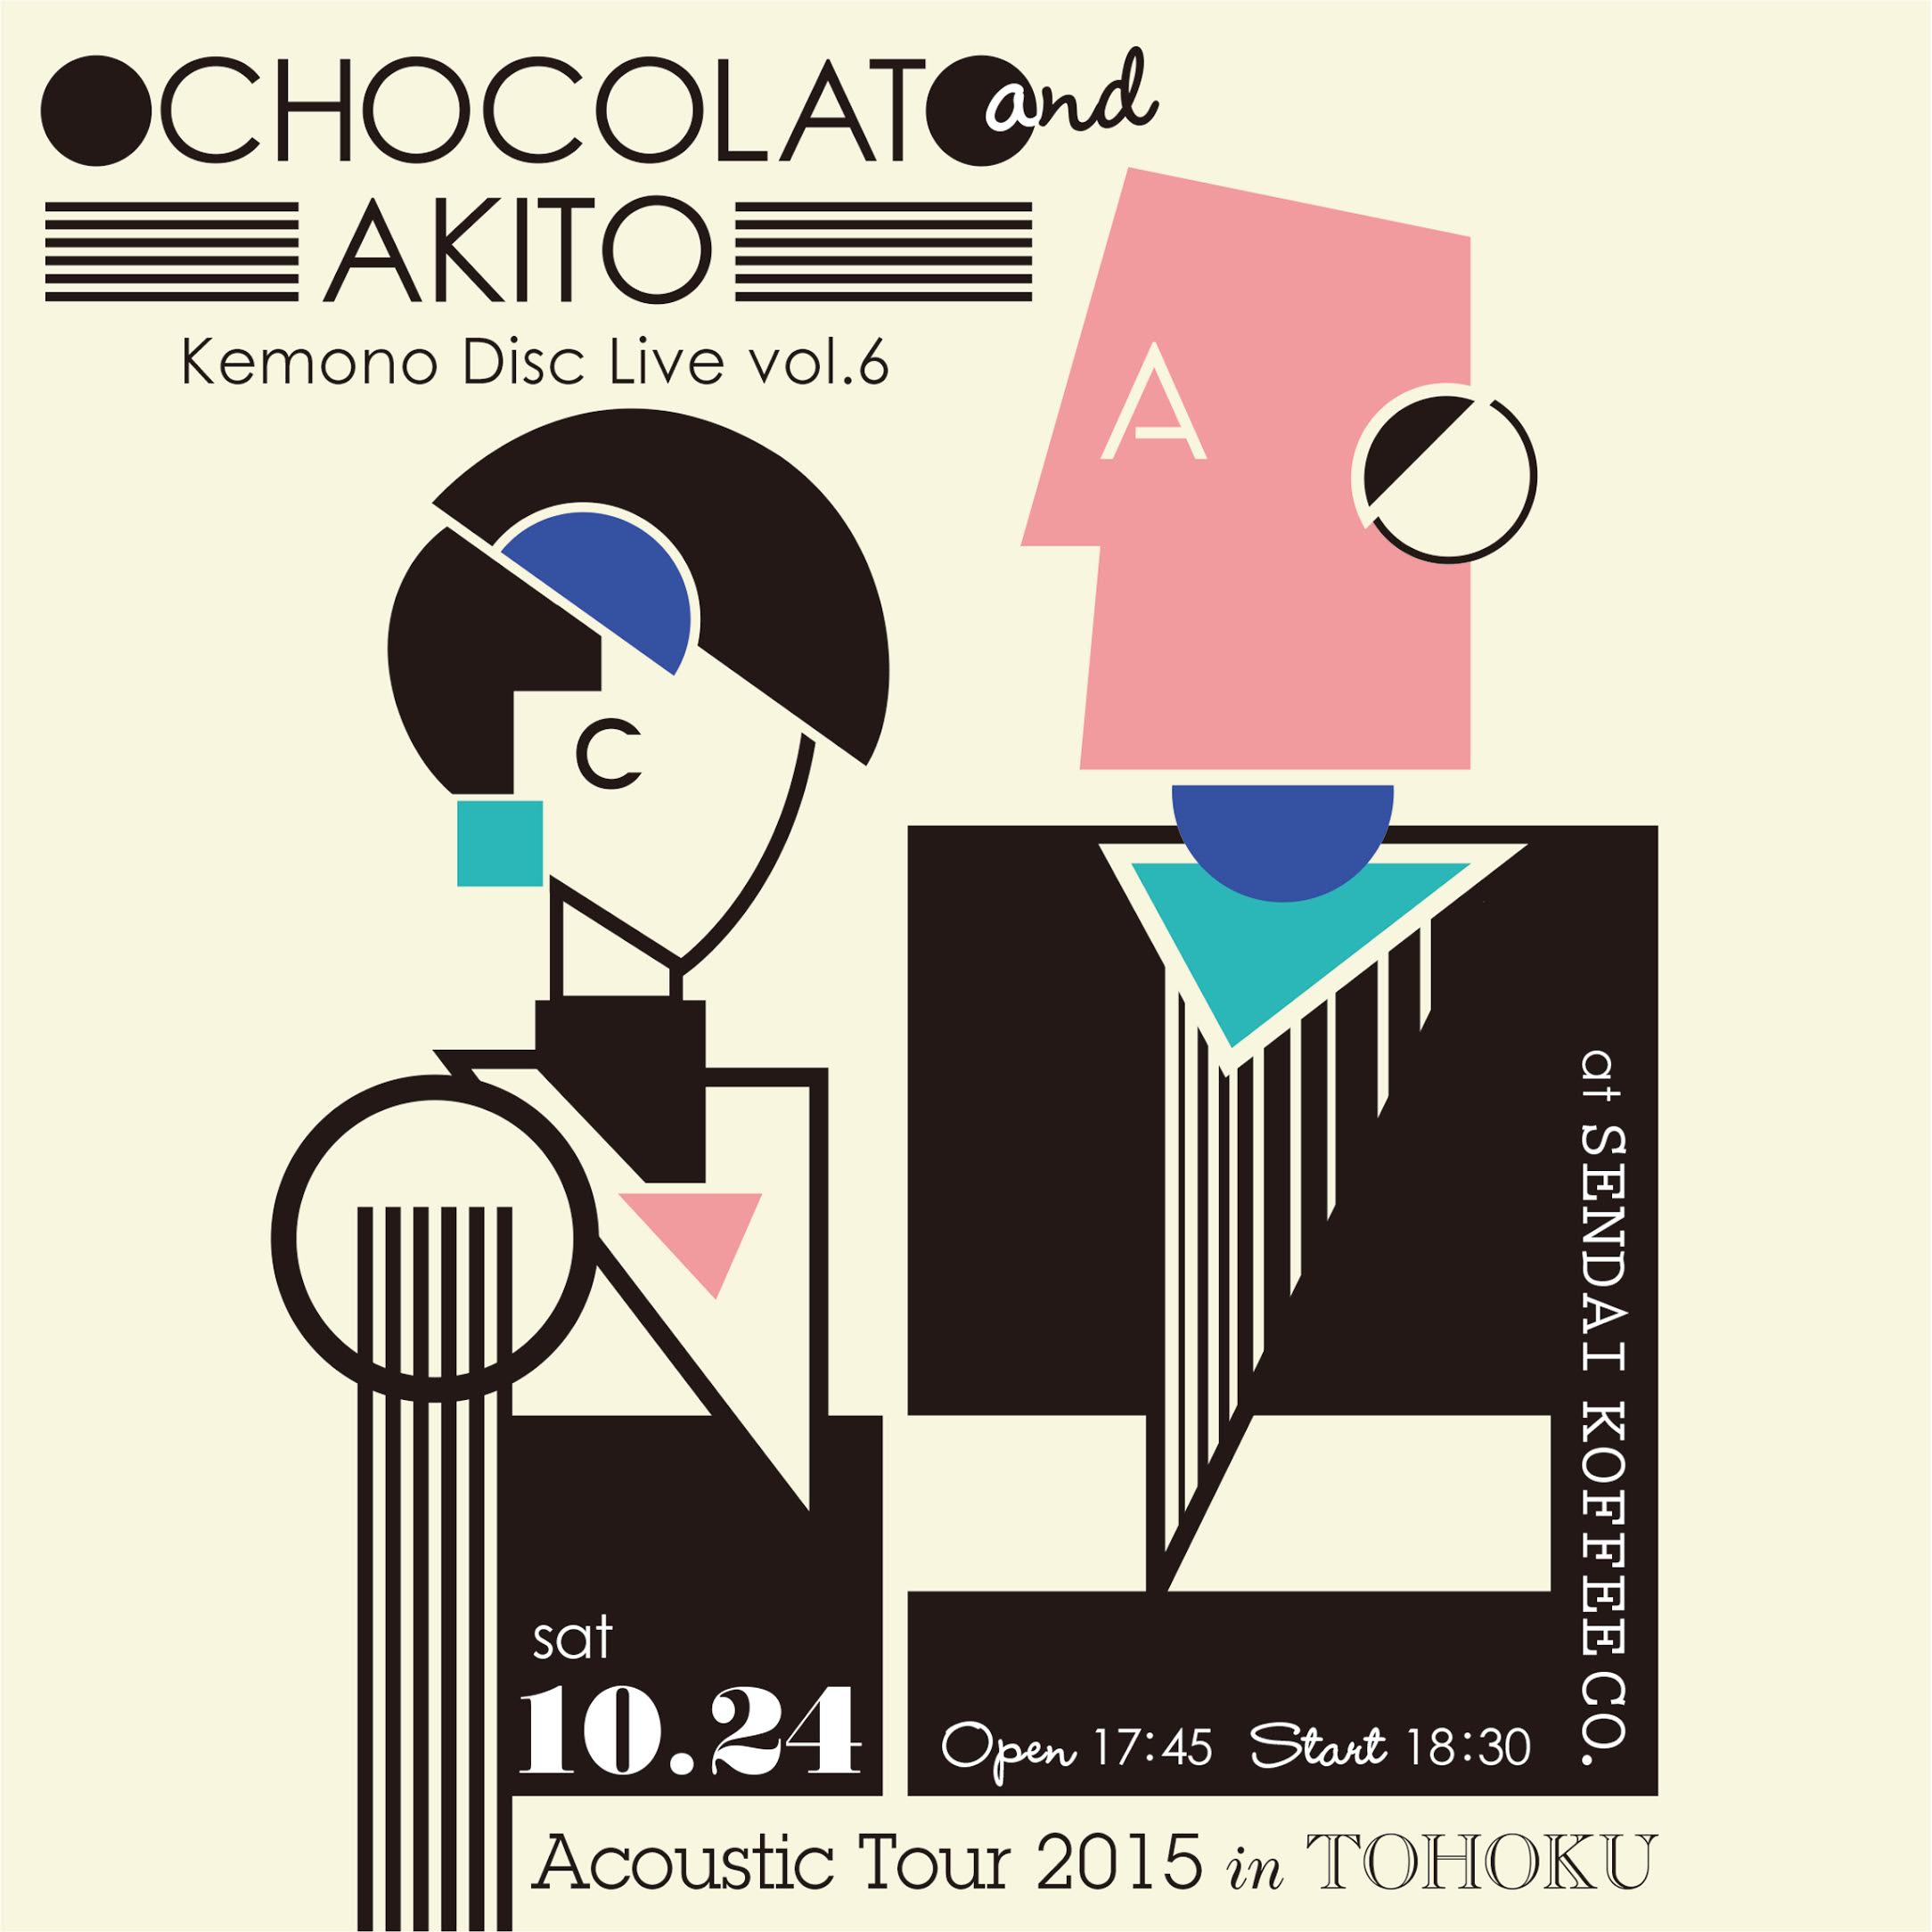 Chocolat and akito Kemono Disc Vol.6 Acoustic Tour 2015 in TOHOKU